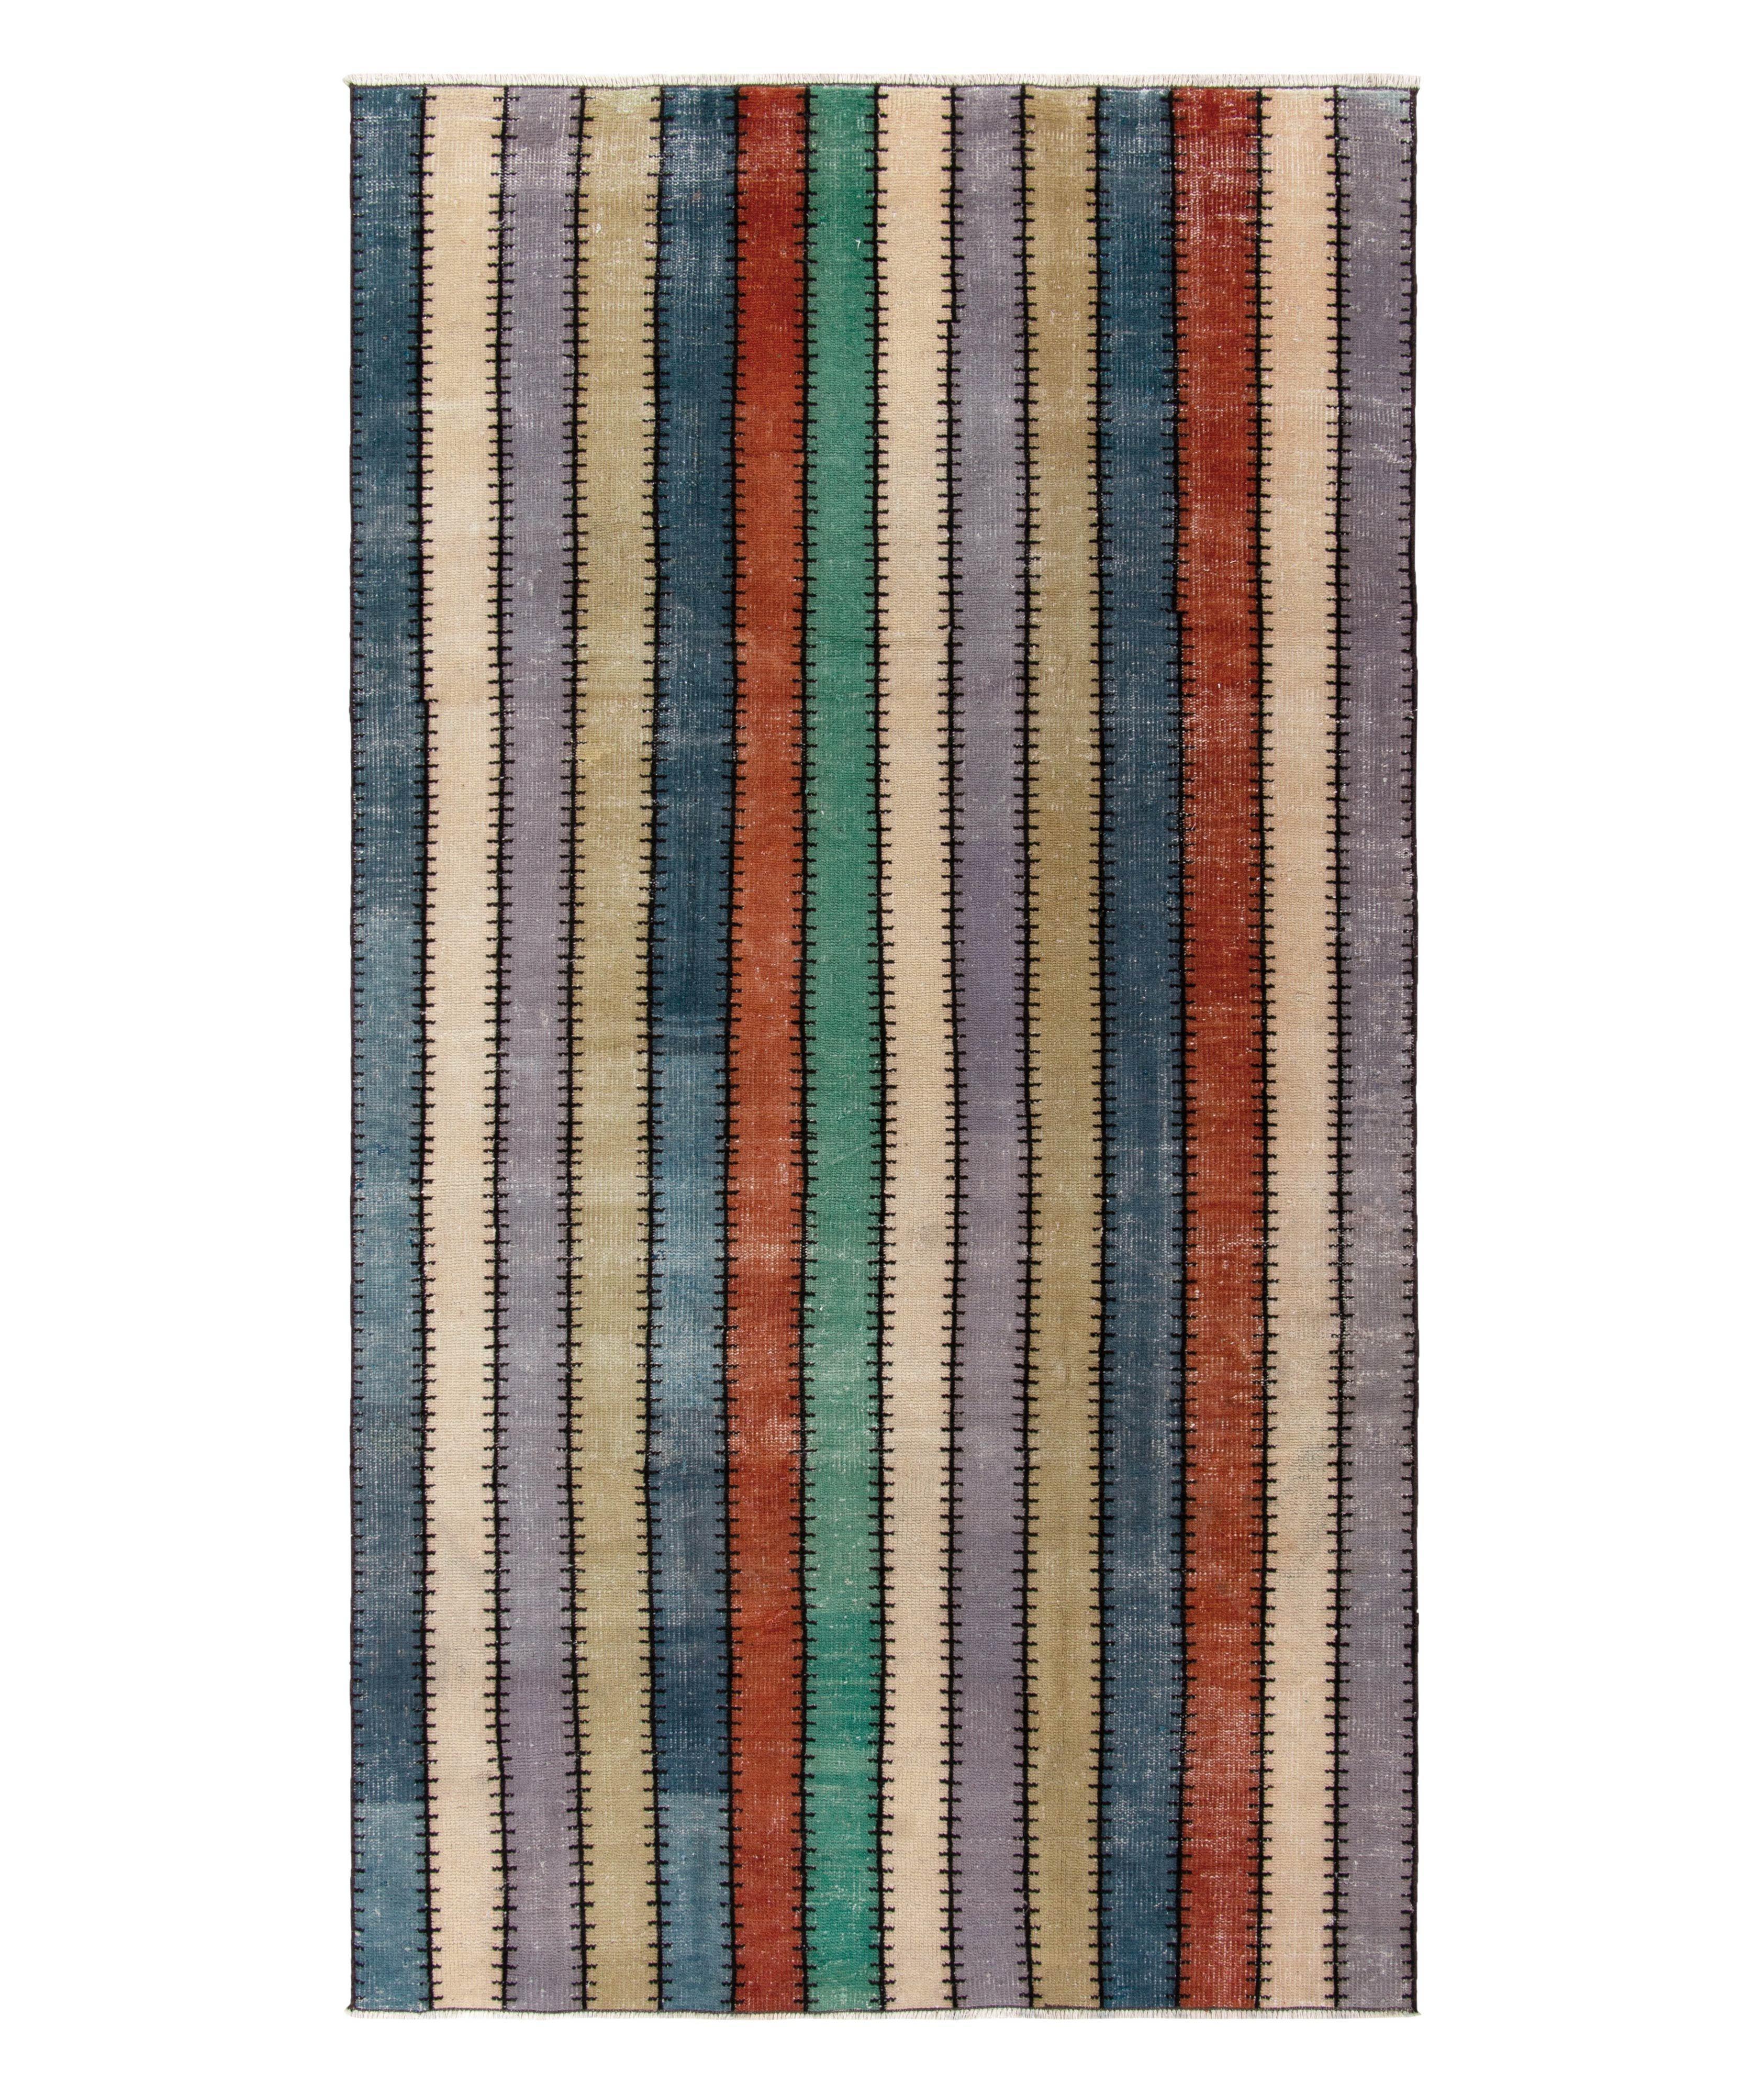 1960s Vintage Distressed Striped Pattern Rug